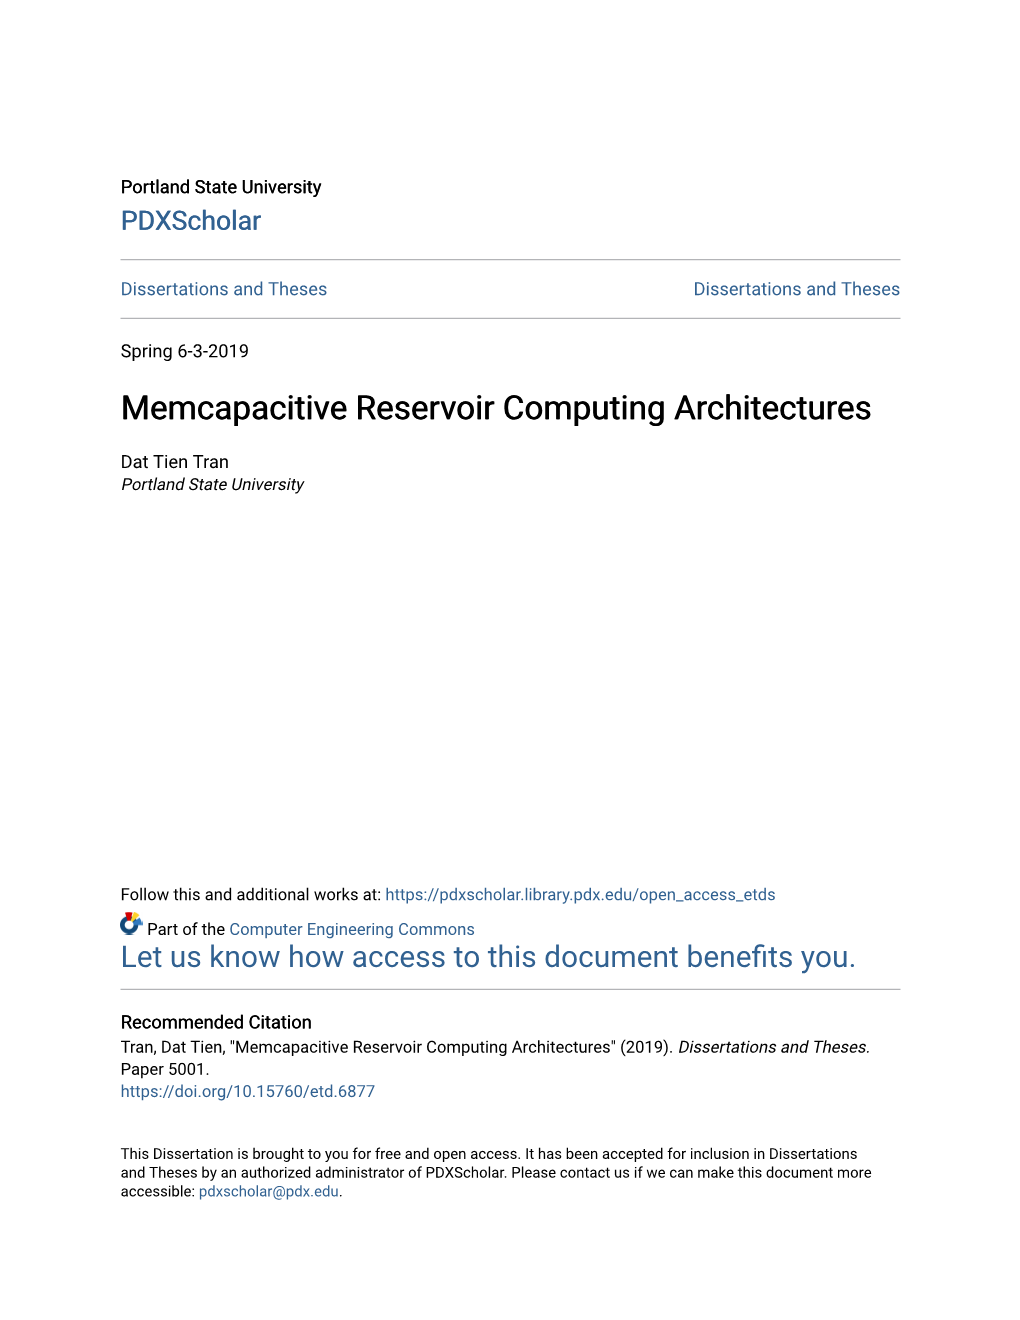 Memcapacitive Reservoir Computing Architectures